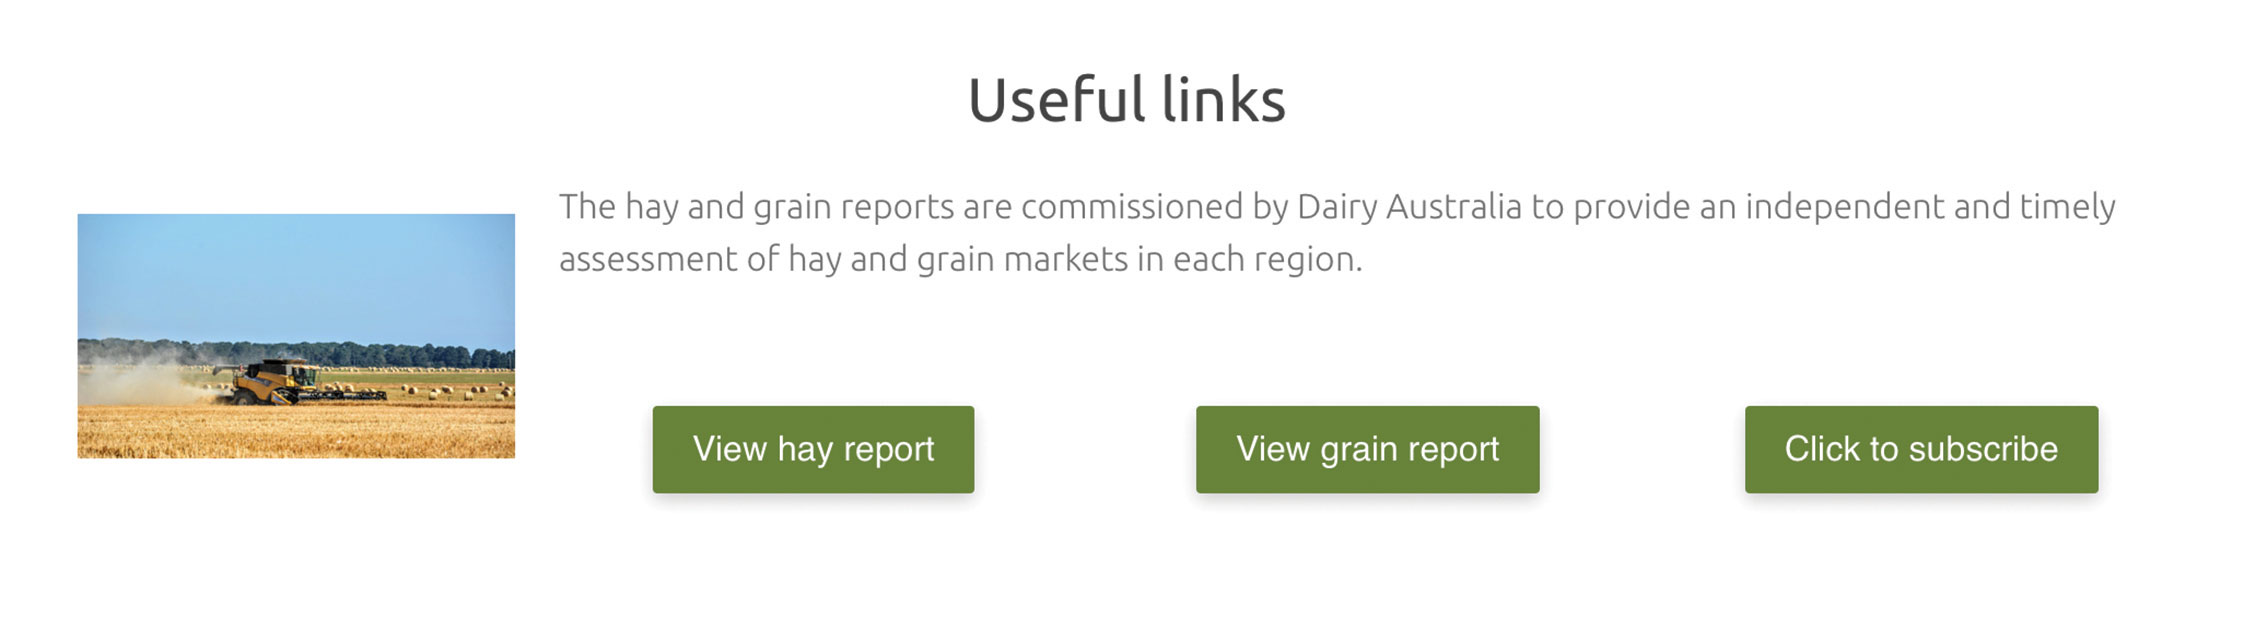 Screenshot of useful links from Feeding livestock website